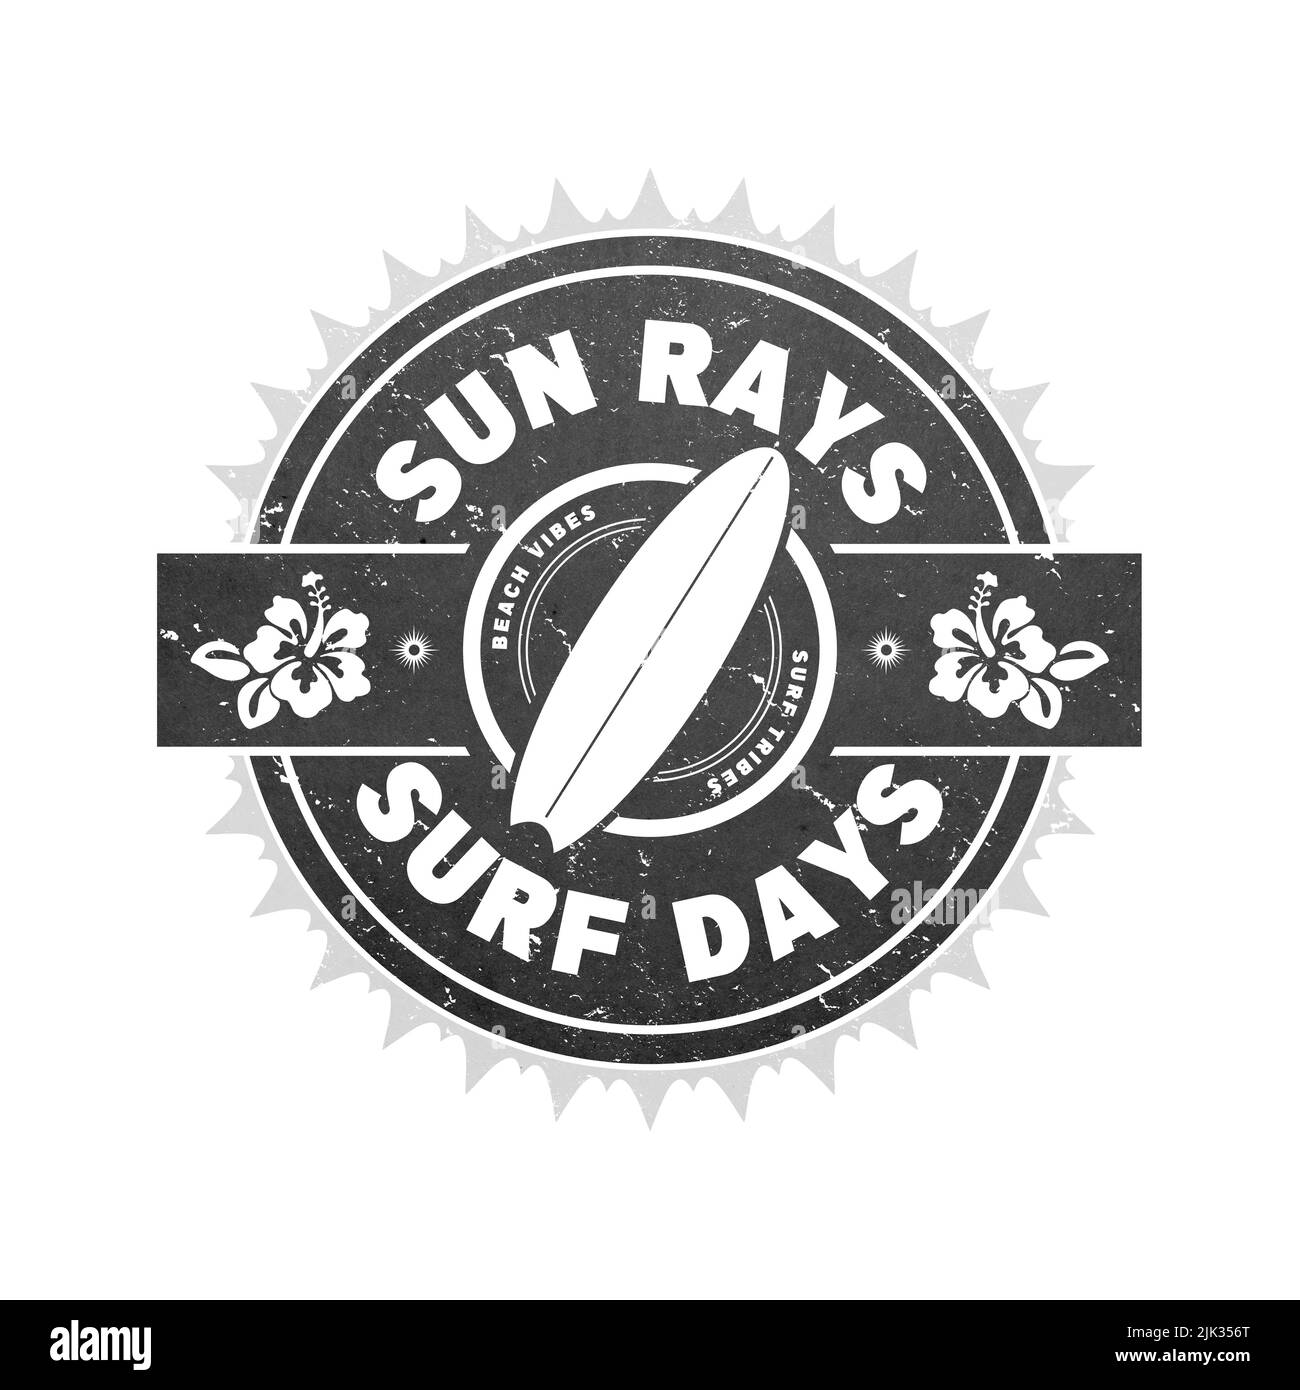 Surfing - Sun Rays Surf Days - Retro Surfer Graphic Design Stock Photo